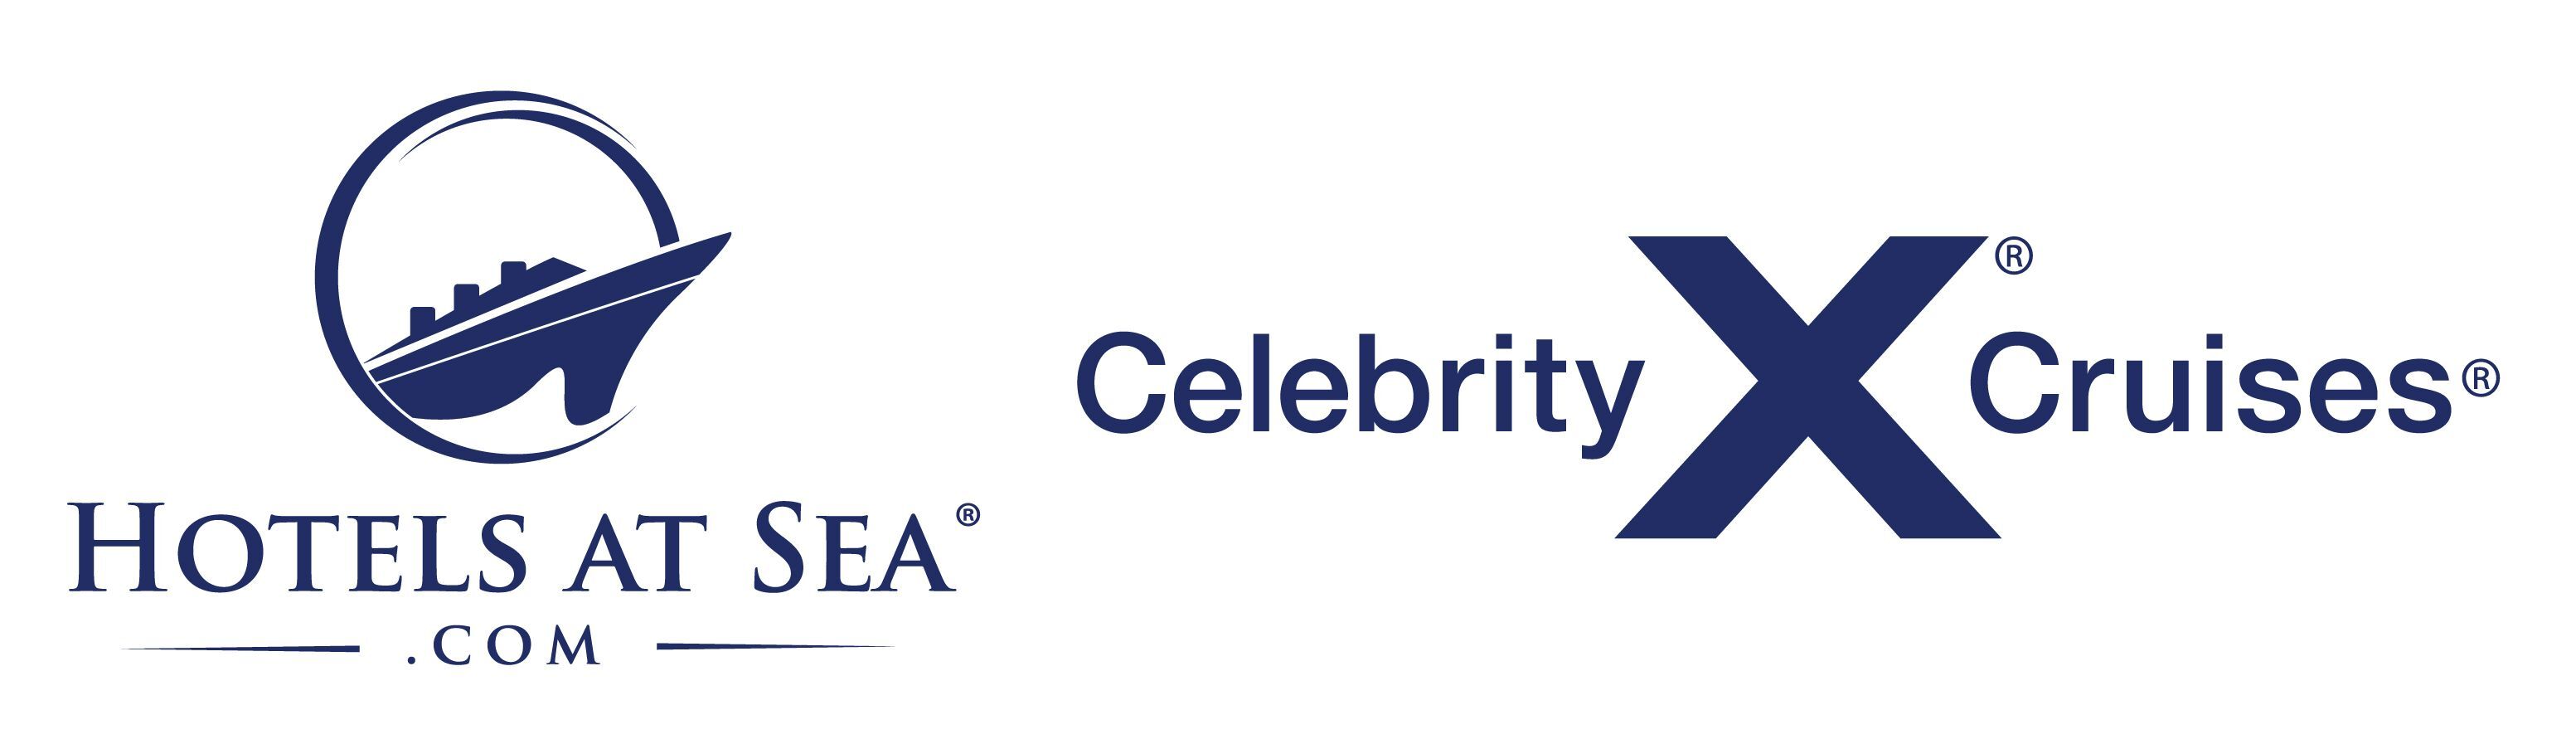 Celebrity Cruises 